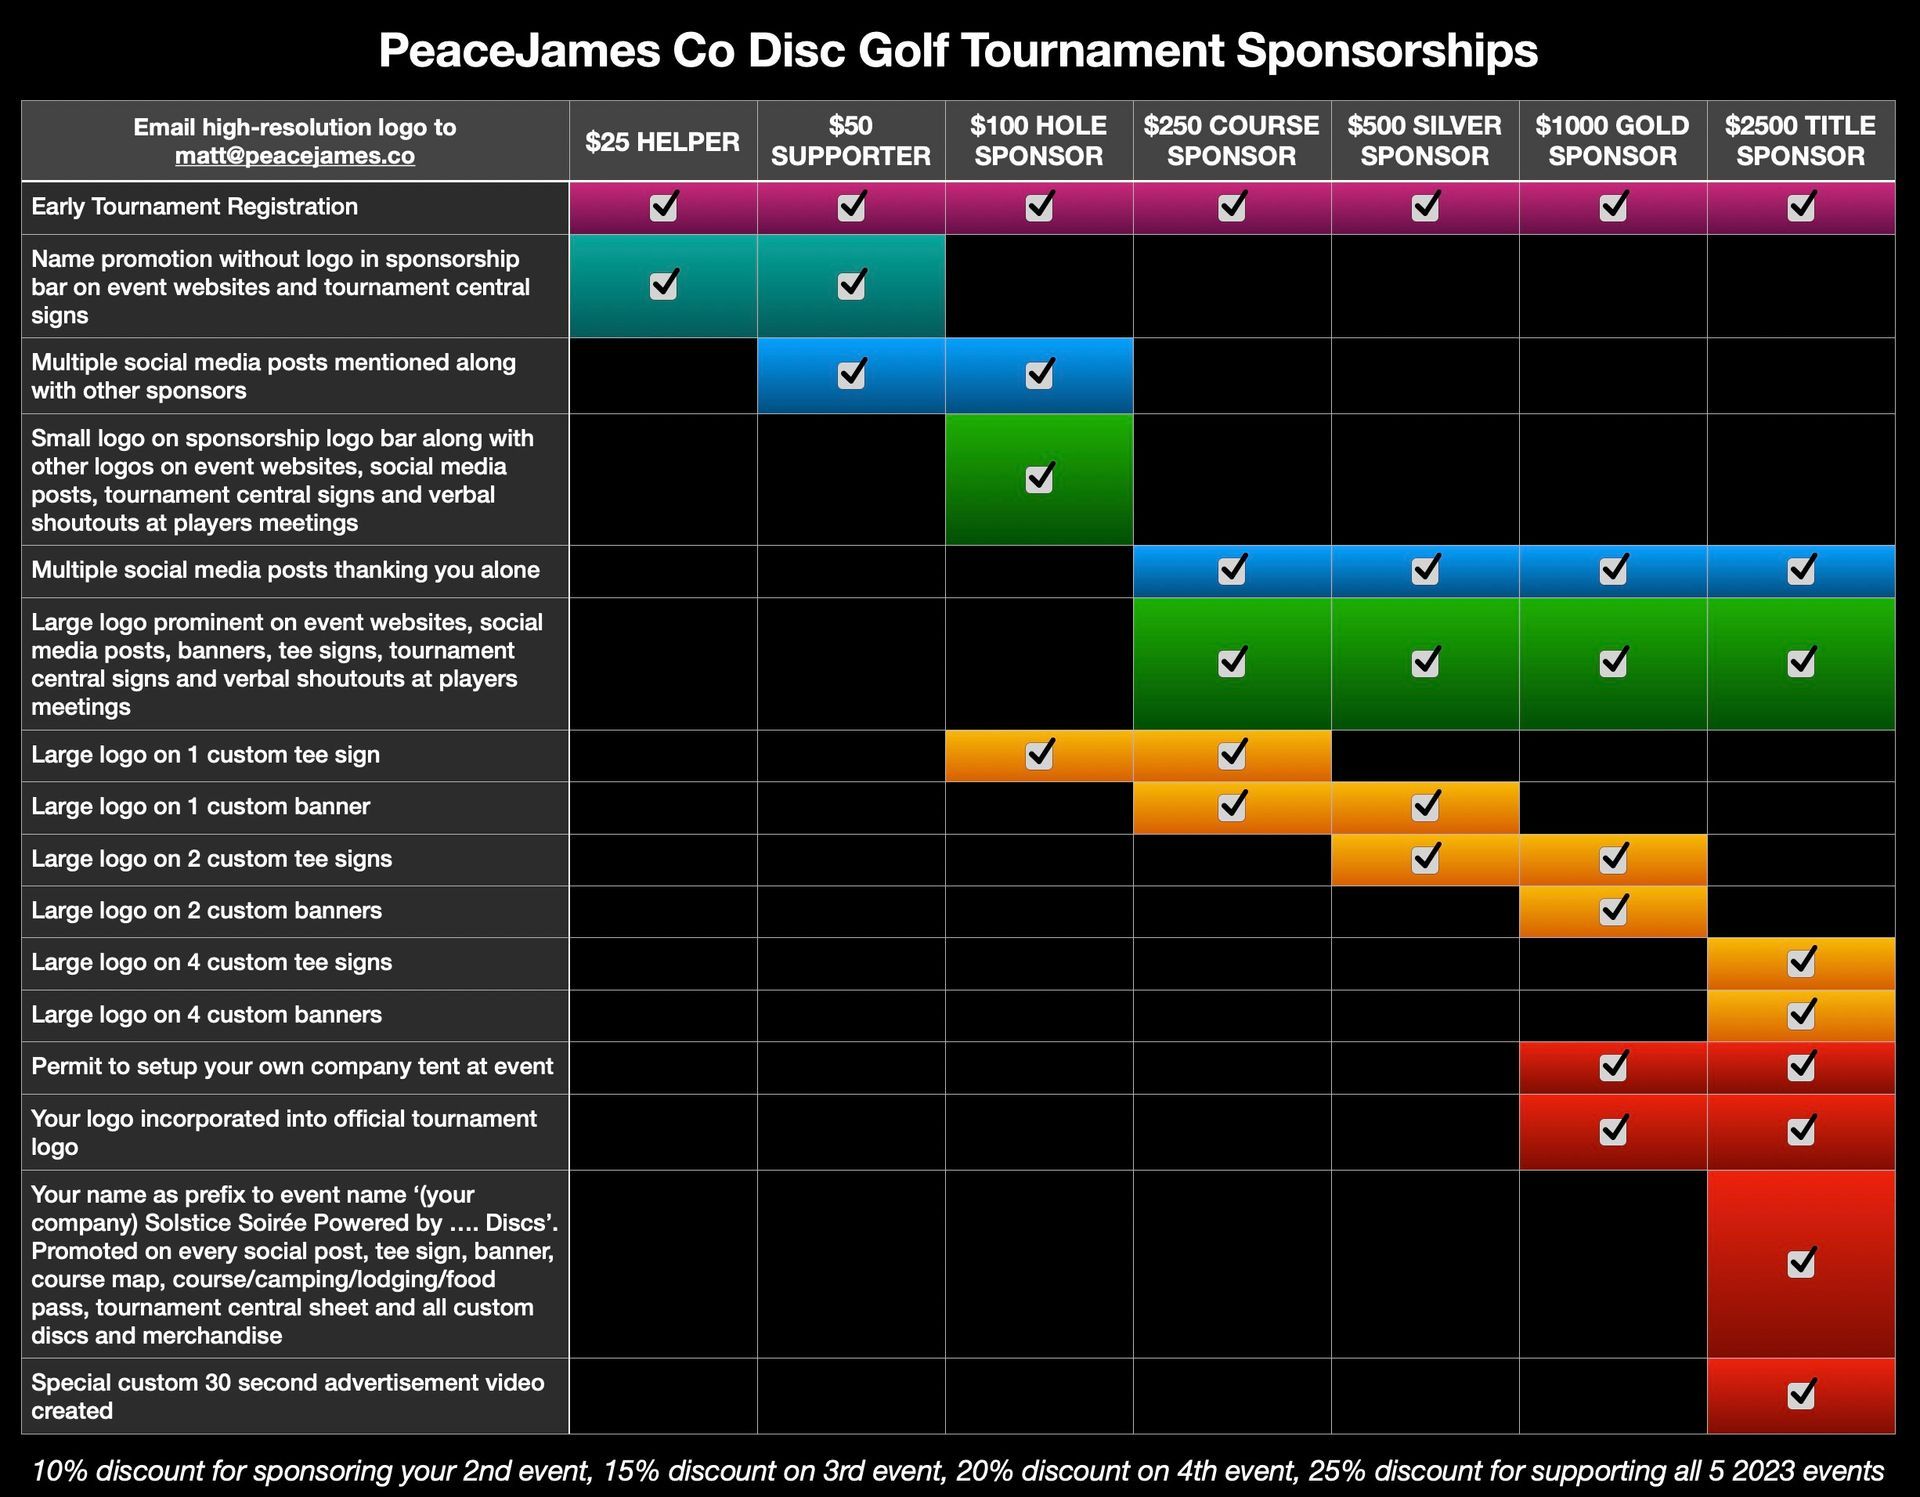 PeaceJames Co Tournament Sponsorships Breakdown